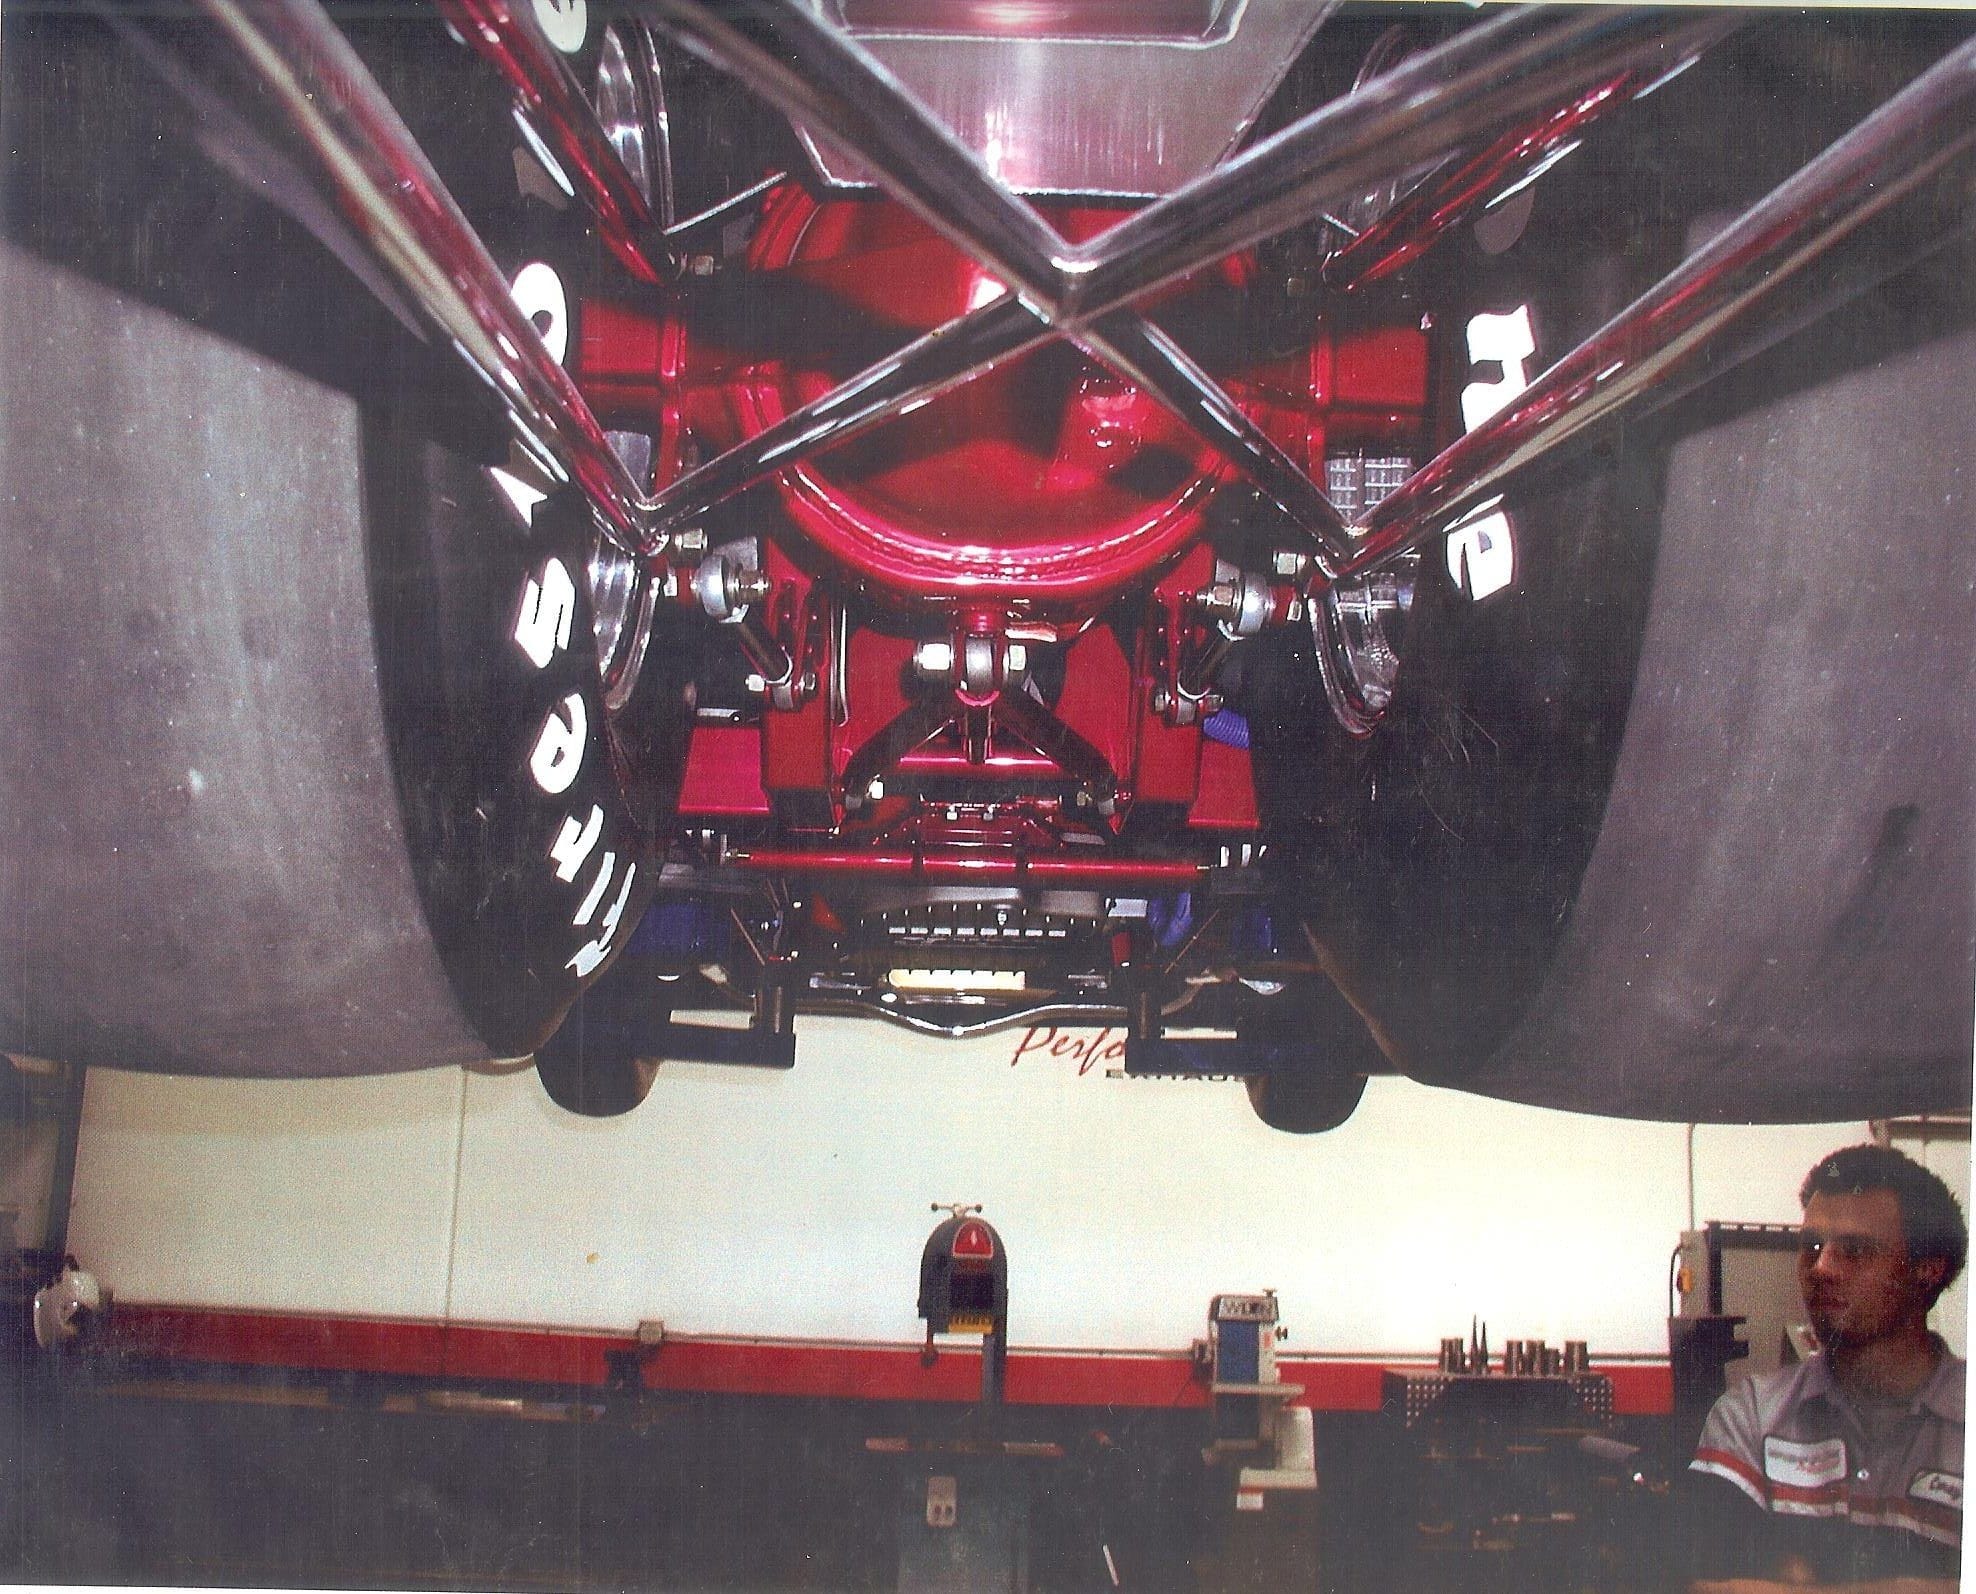 Bottom Engine of the Car